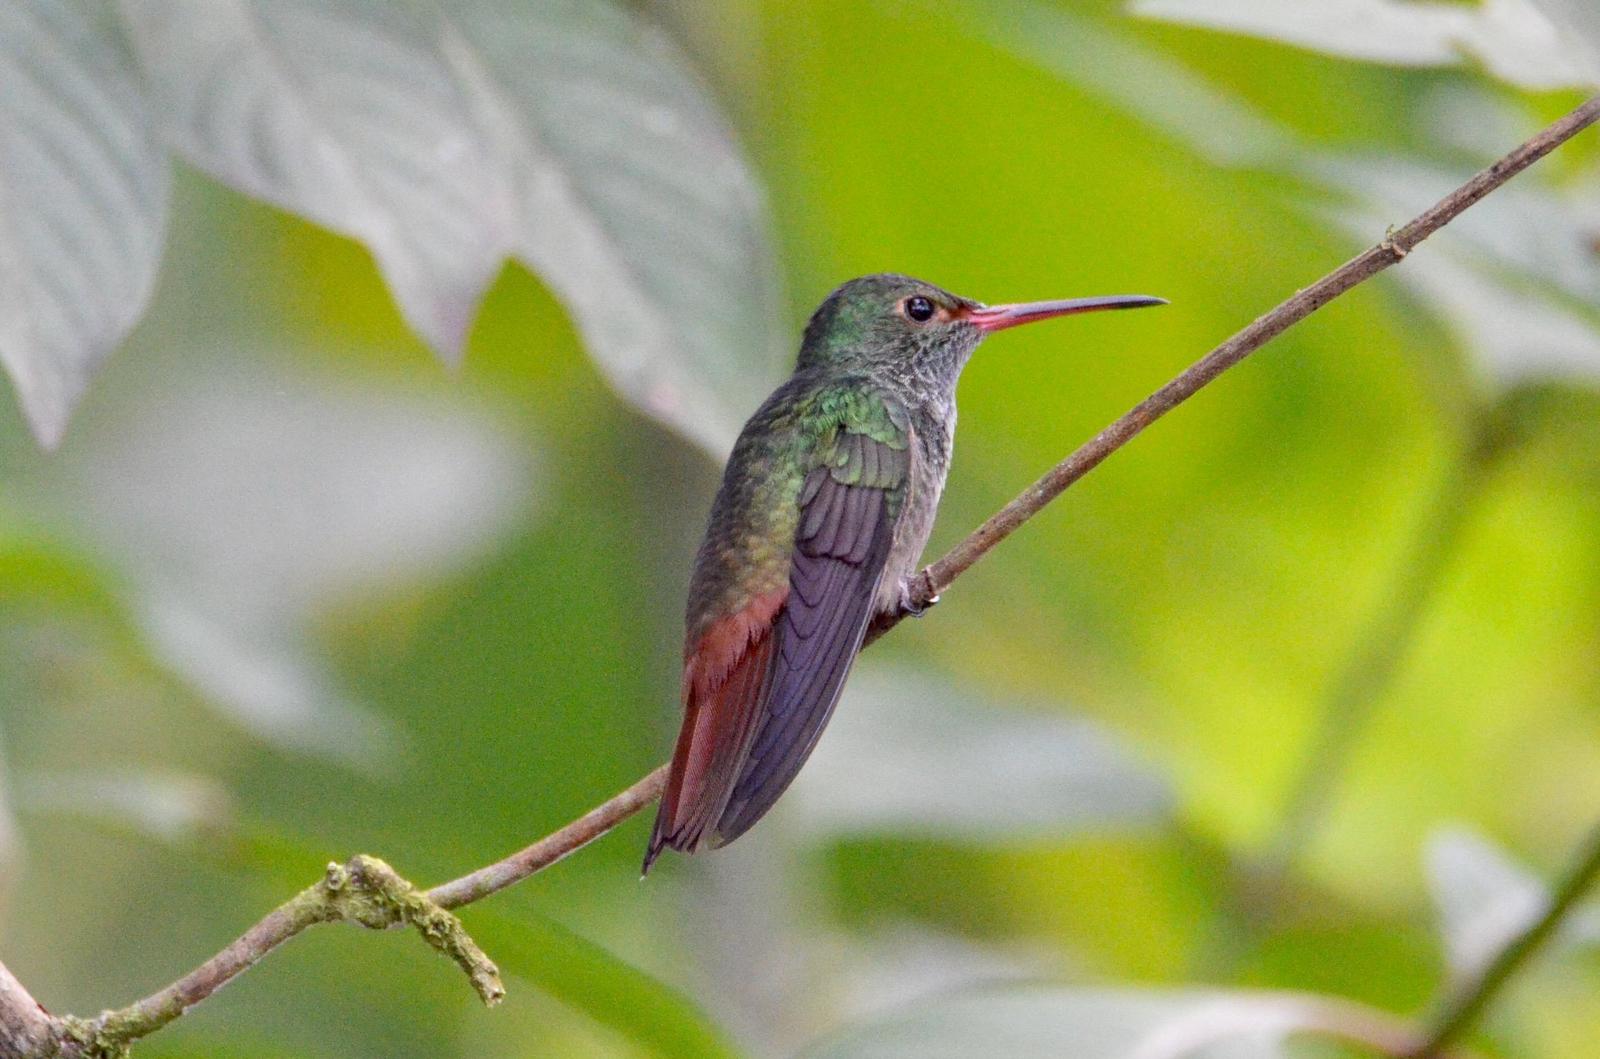 Rufous-tailed Hummingbird Photo by Paula Duenas